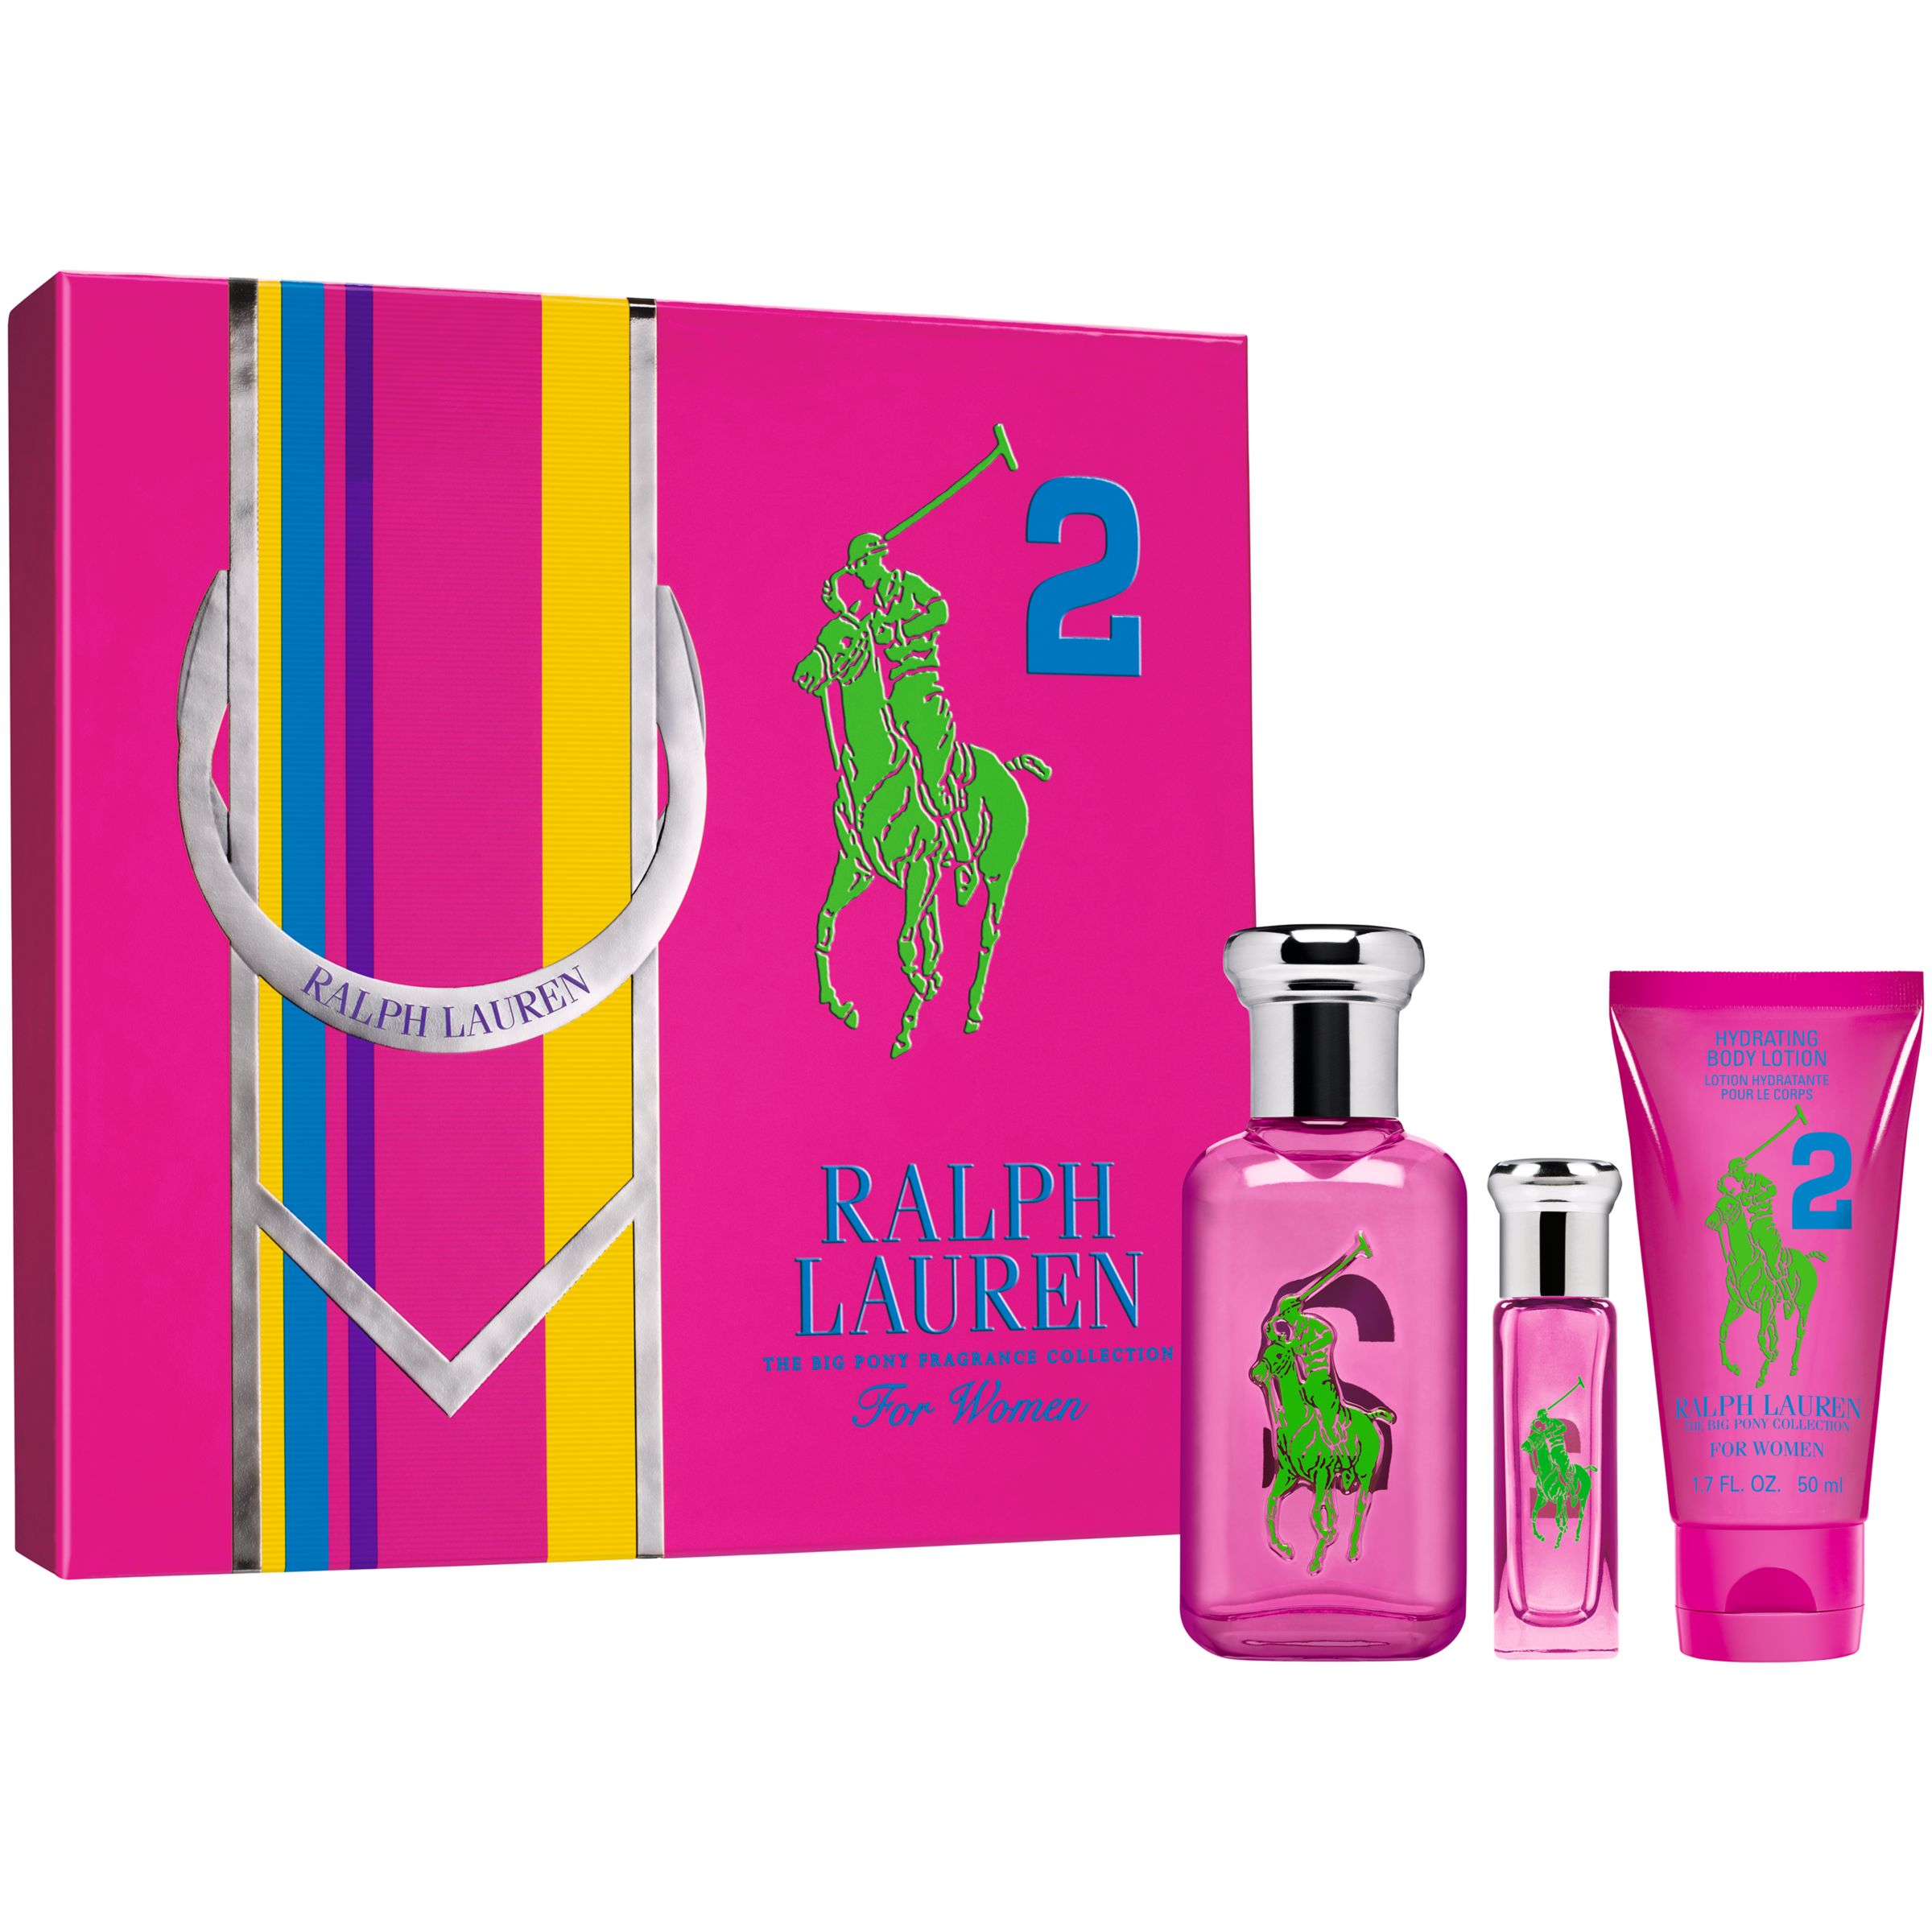 Ralph Lauren Big Pony Women 2 Eau De Toilette Spray 50ml Gift Set